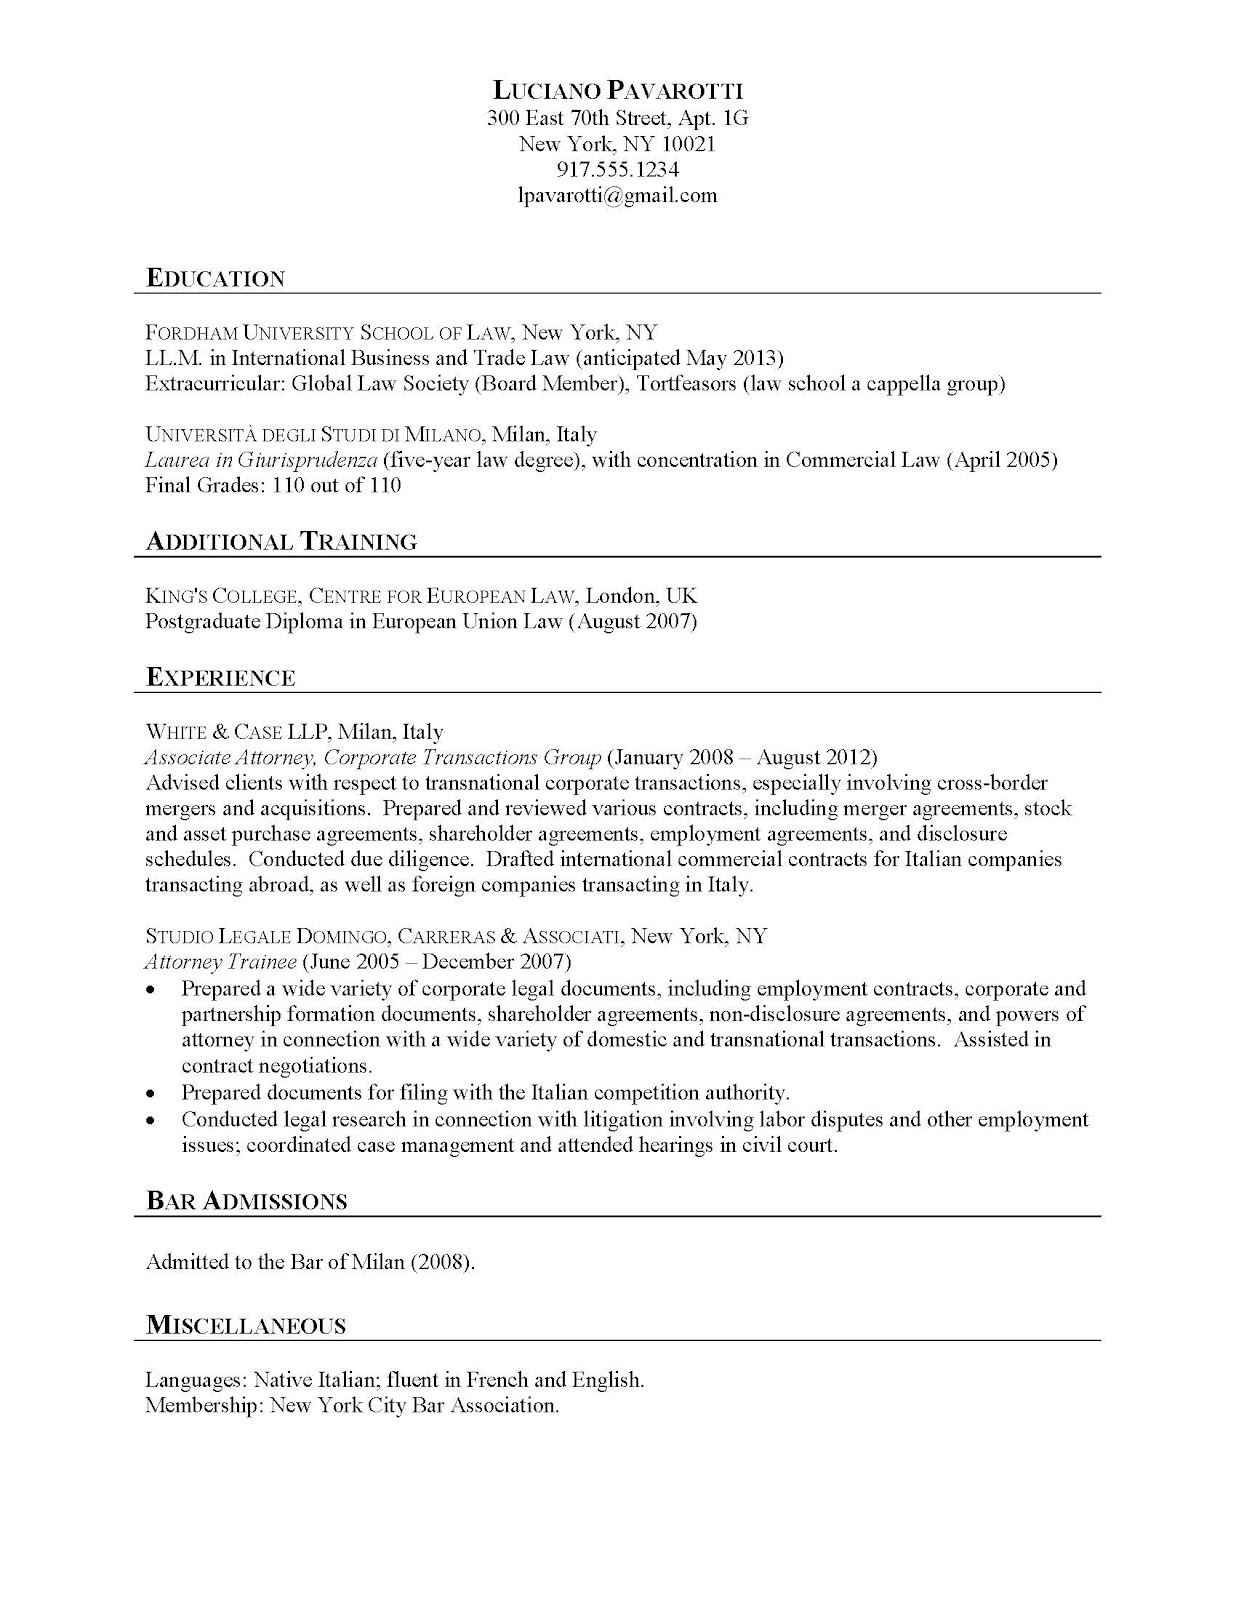 In job kazakhstan resume